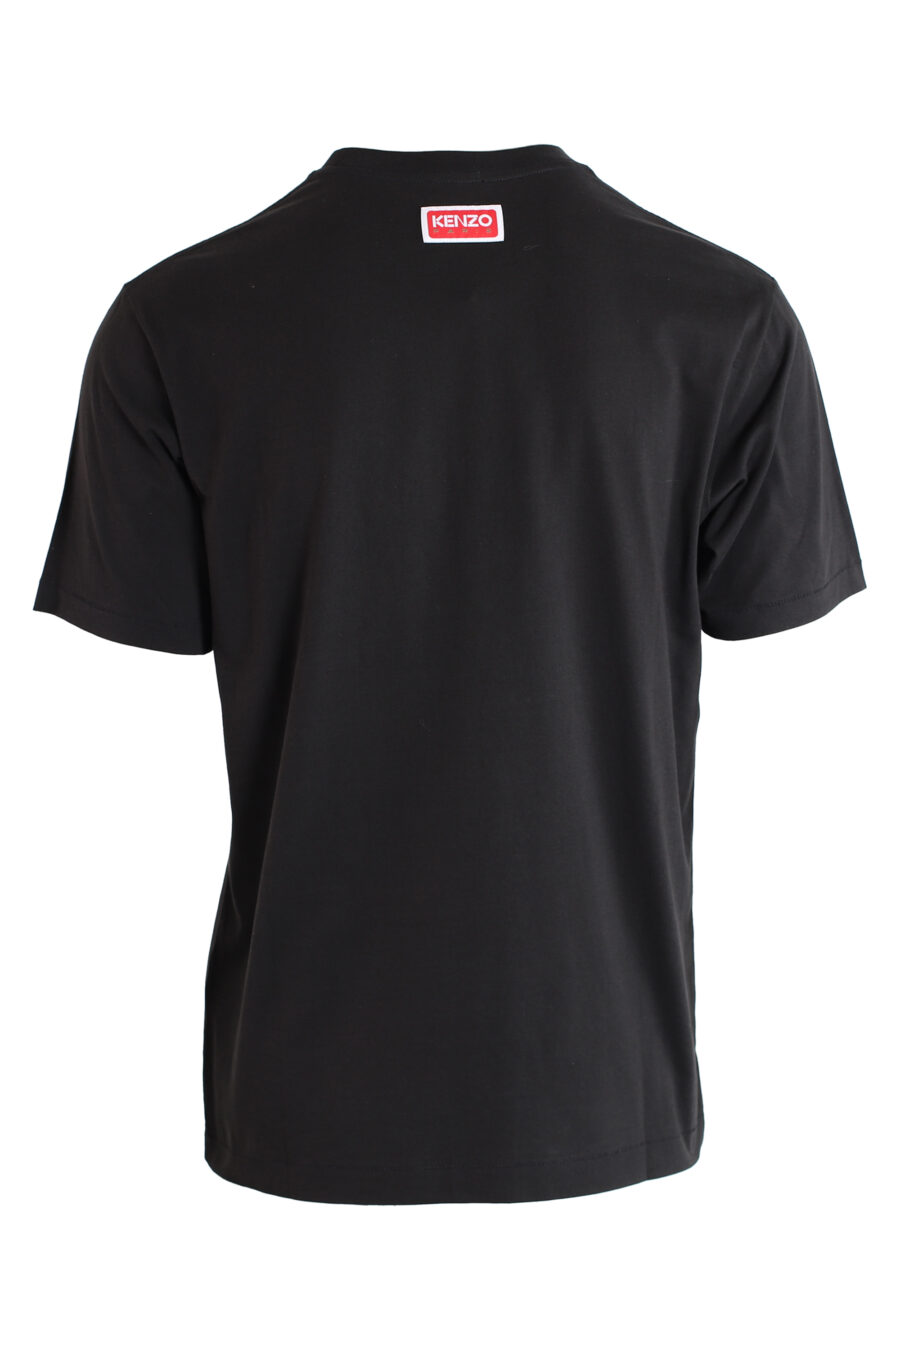 T-shirt noir avec logo "fleur" - IMG 3175